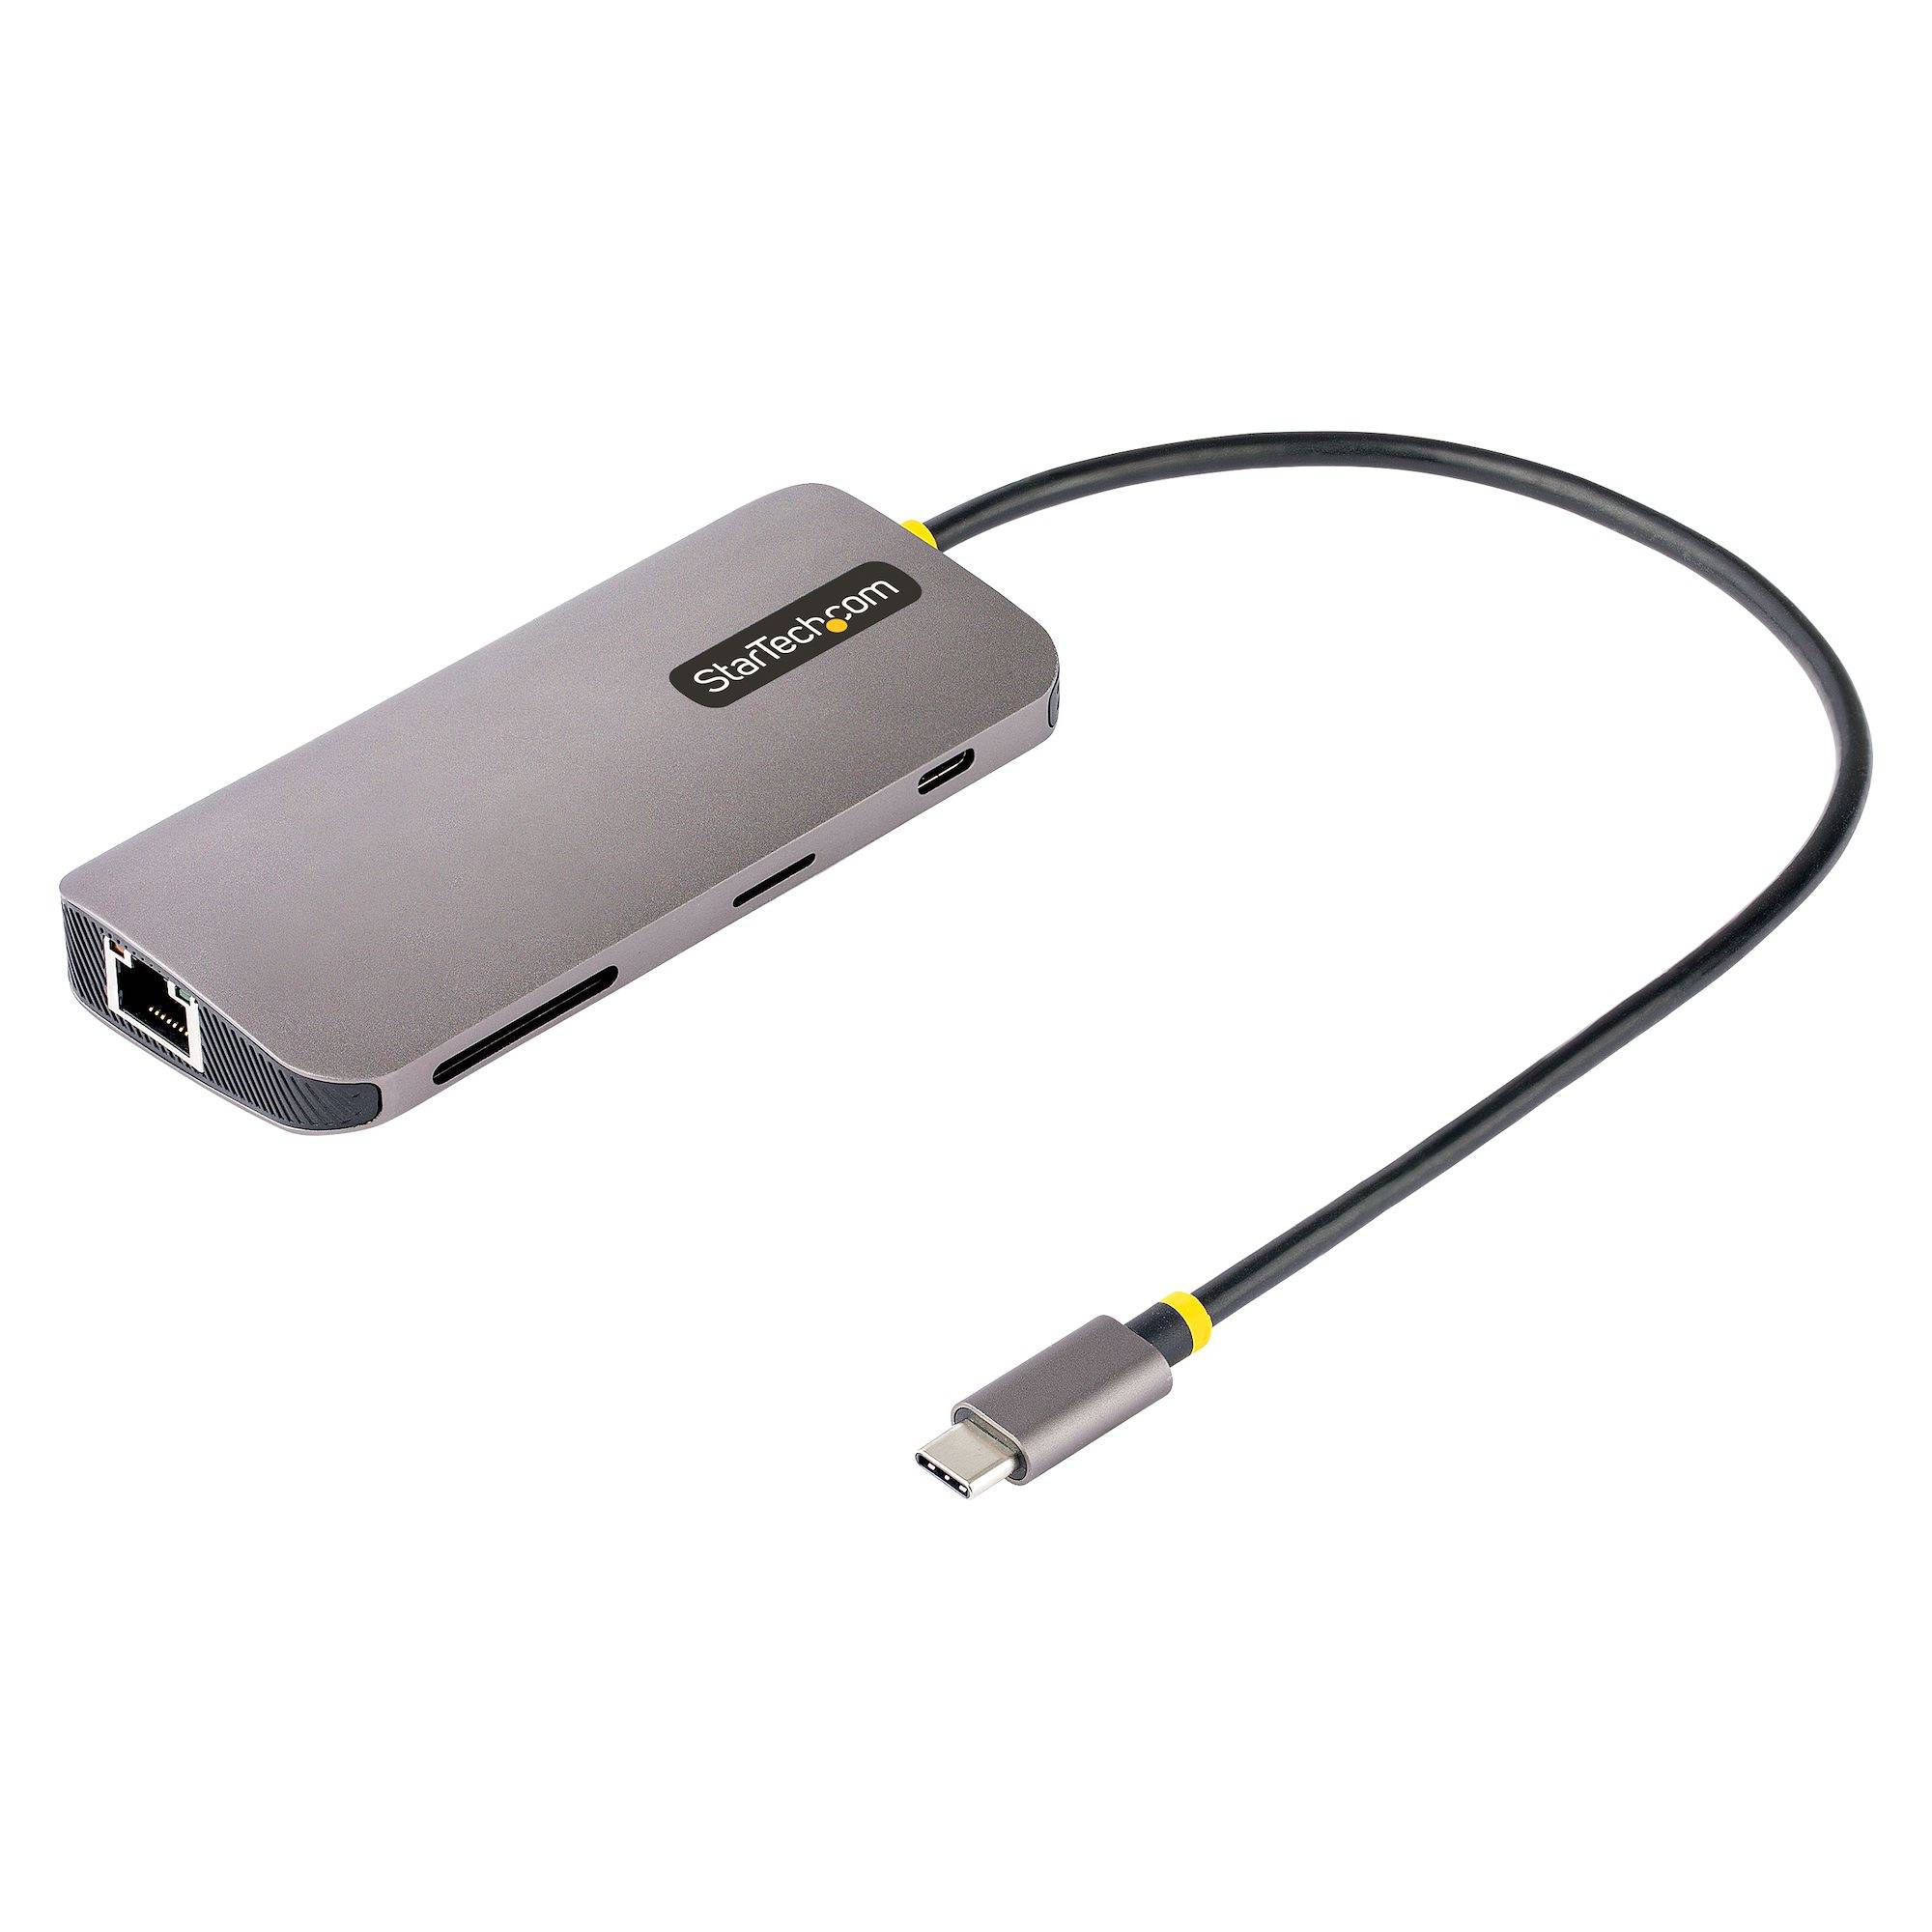 Rca Informatique - Image du produit : USB C MULTIPORT ADAPTER 4K 60HZ HDMI VIDEO/5GBPS USB HUB/100W PD